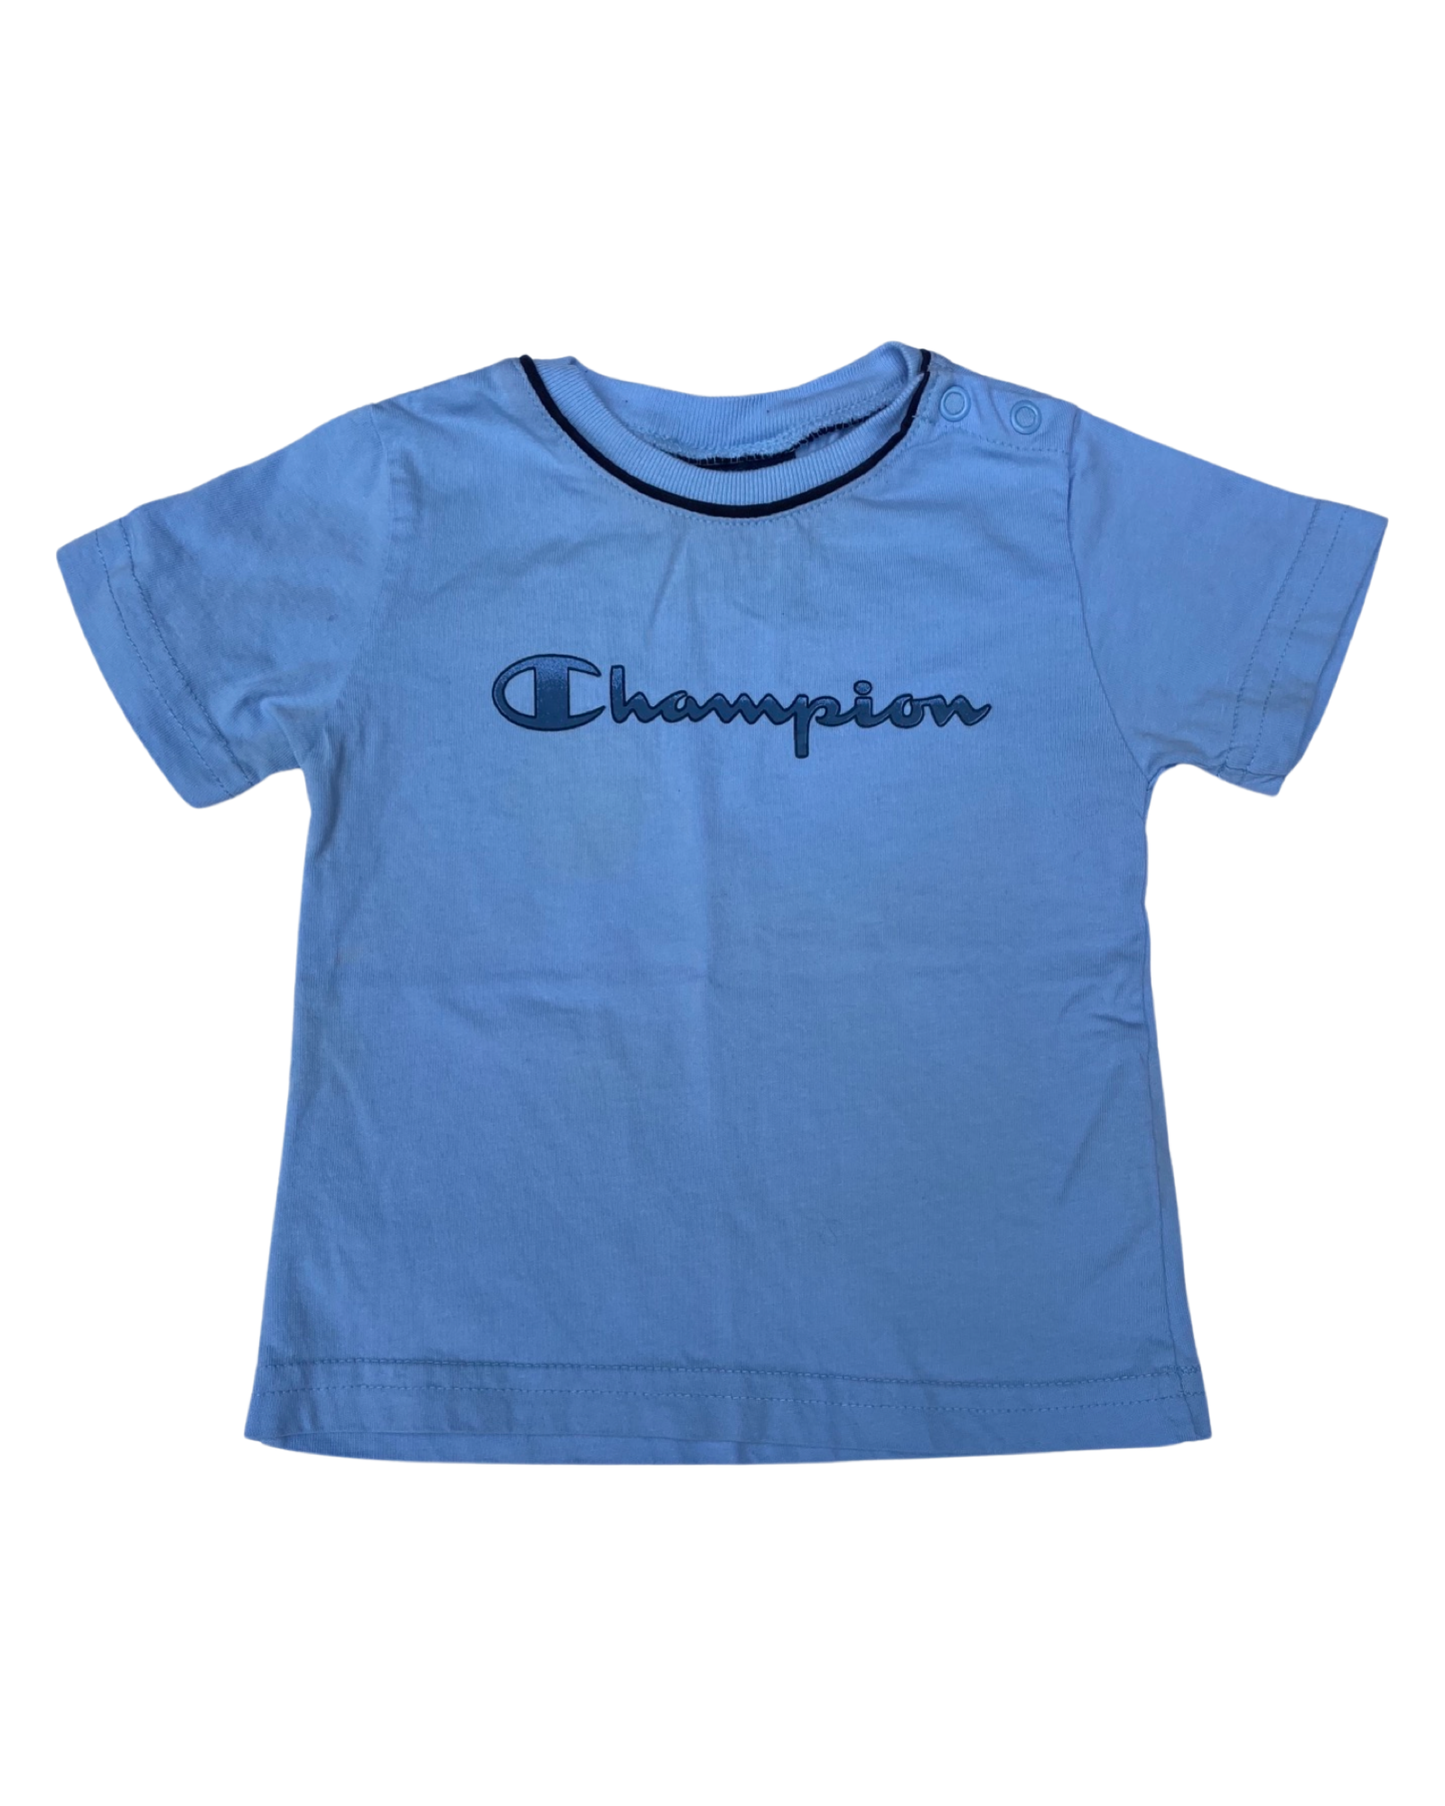 Champion vintage t shirt ( size 6-9mths)